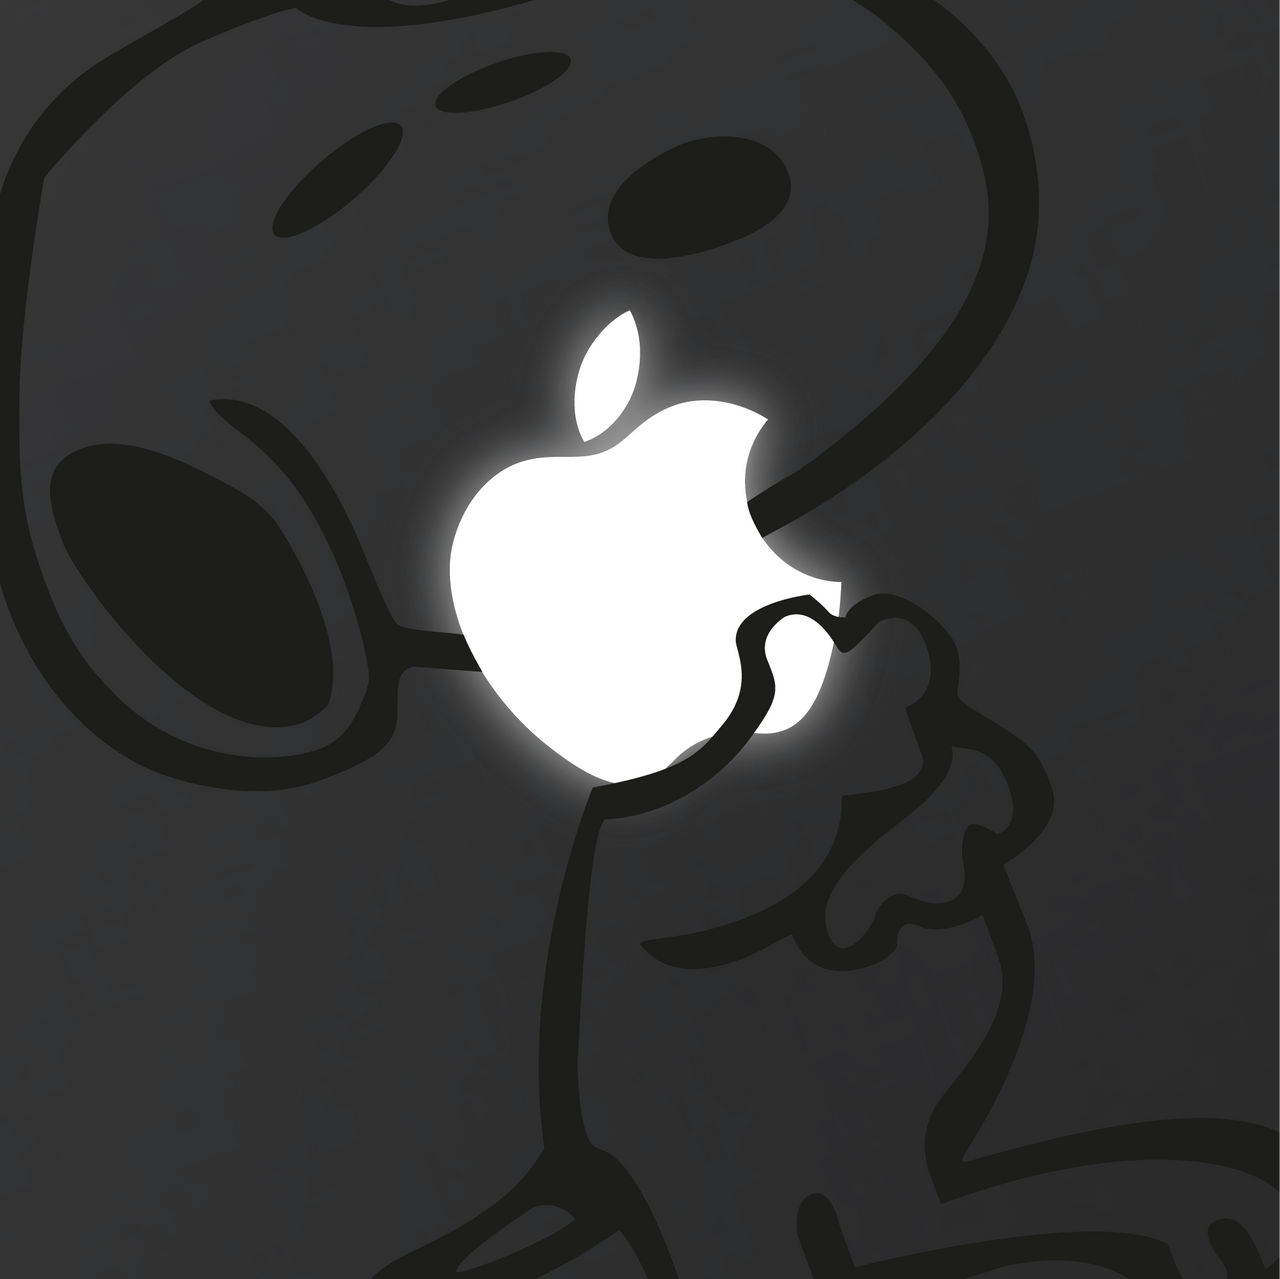 Snoopy Cuddle Macbook Decal